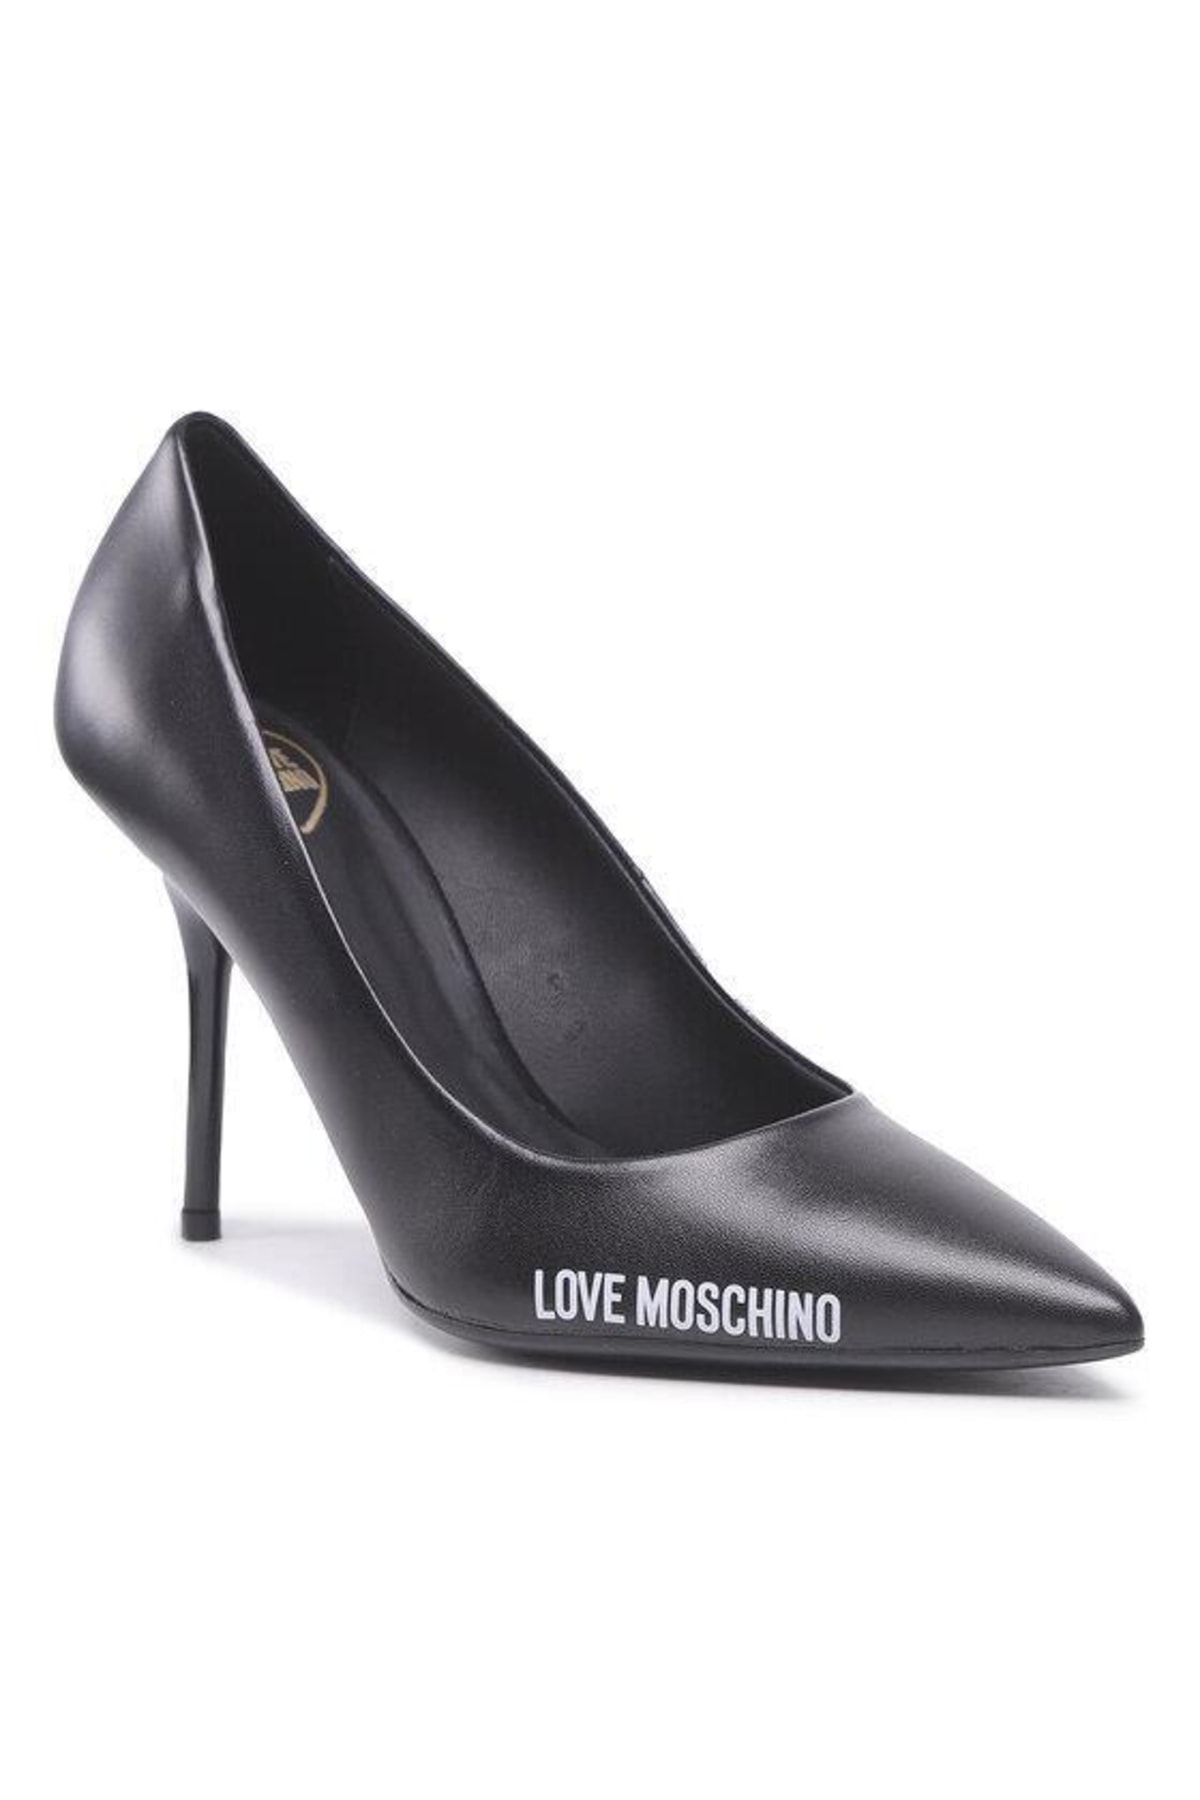 Moschino Imzalı Kadın Ayakkabısı – Ja10089g1g